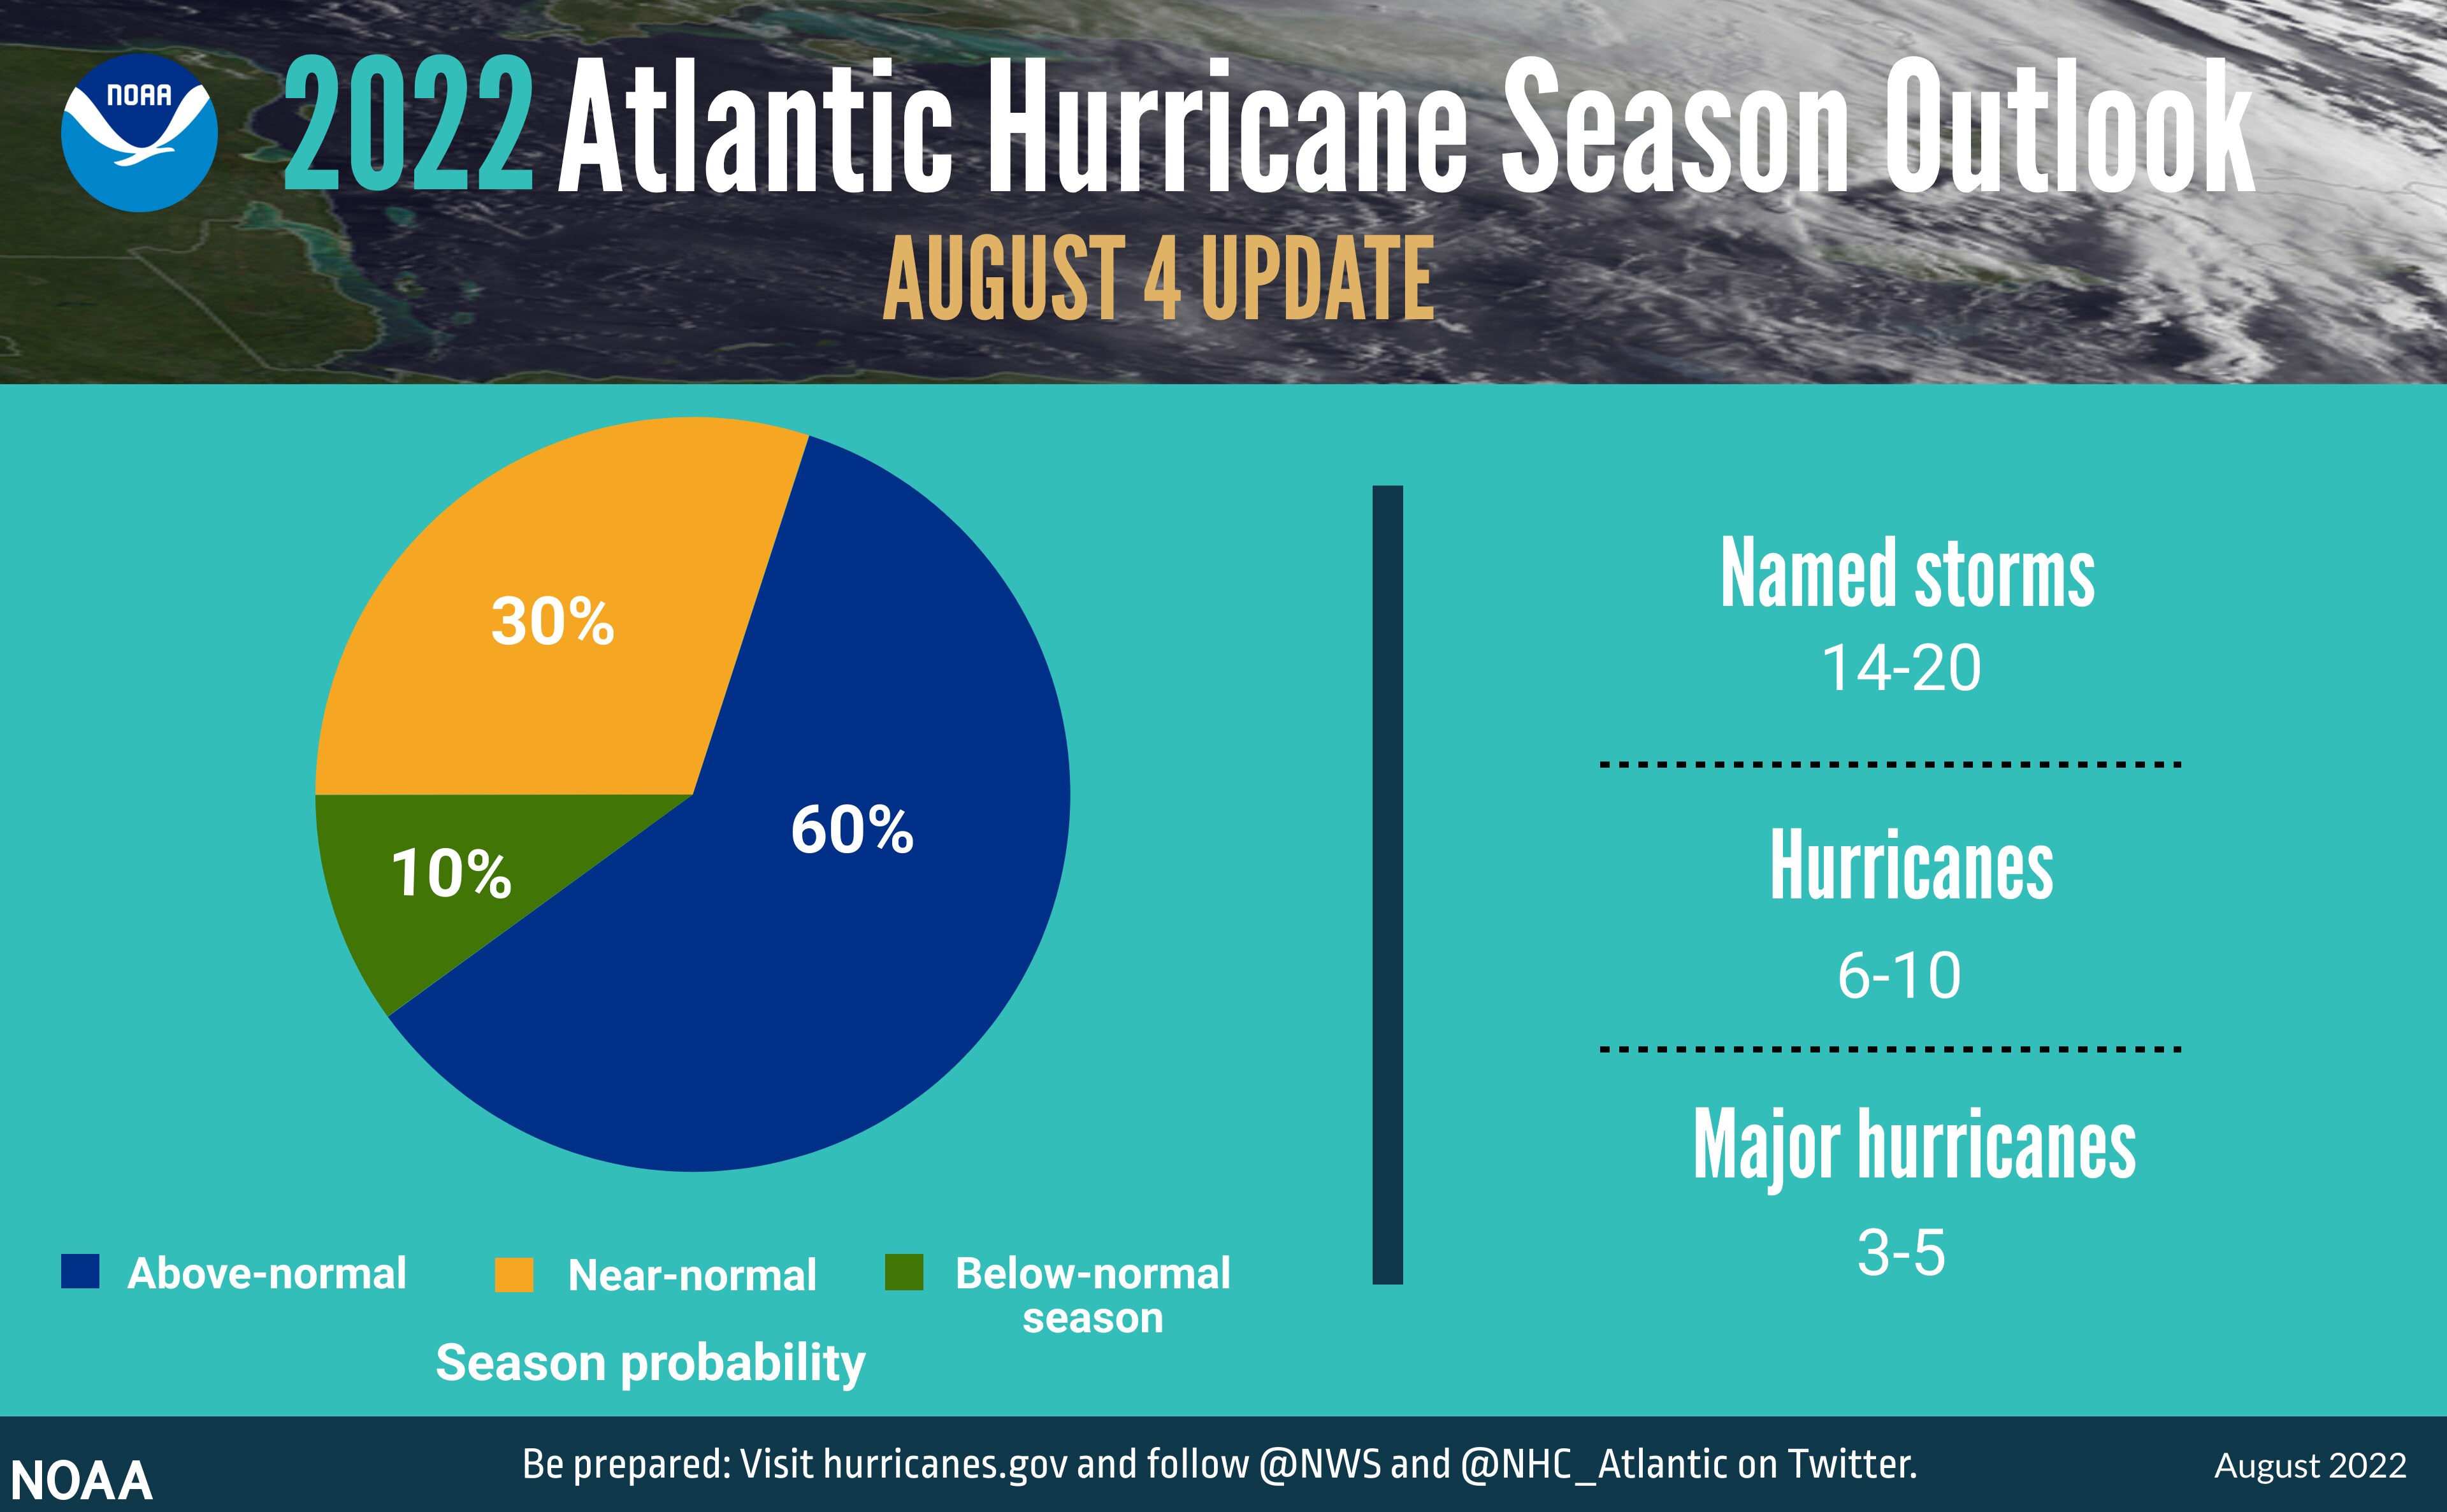 Image showing the 2022 updated Atlantic Hurricane season outlook